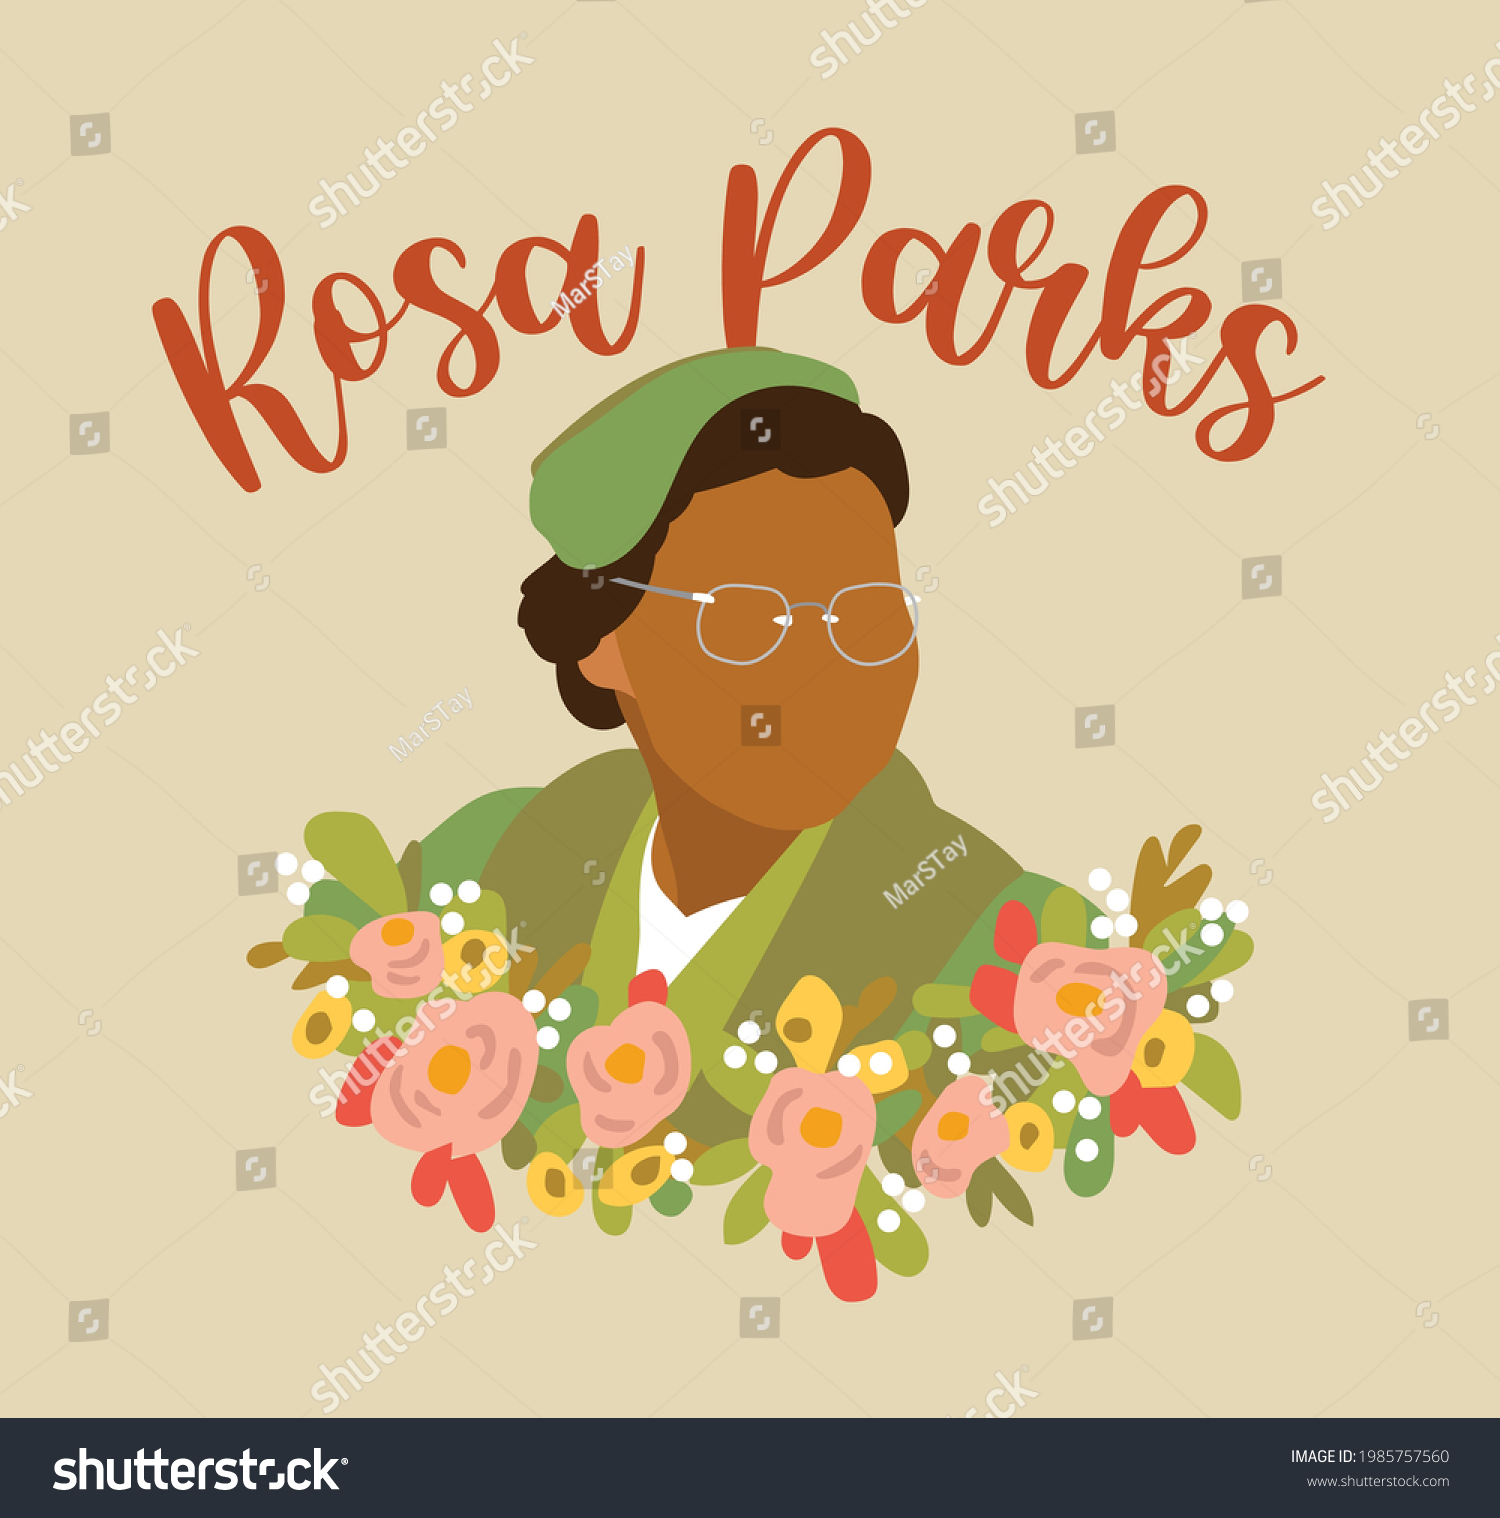 Graphic Design Illustration Decorative Rosa Parks Civil Rights Activist Minimalist Portrait #1985757560